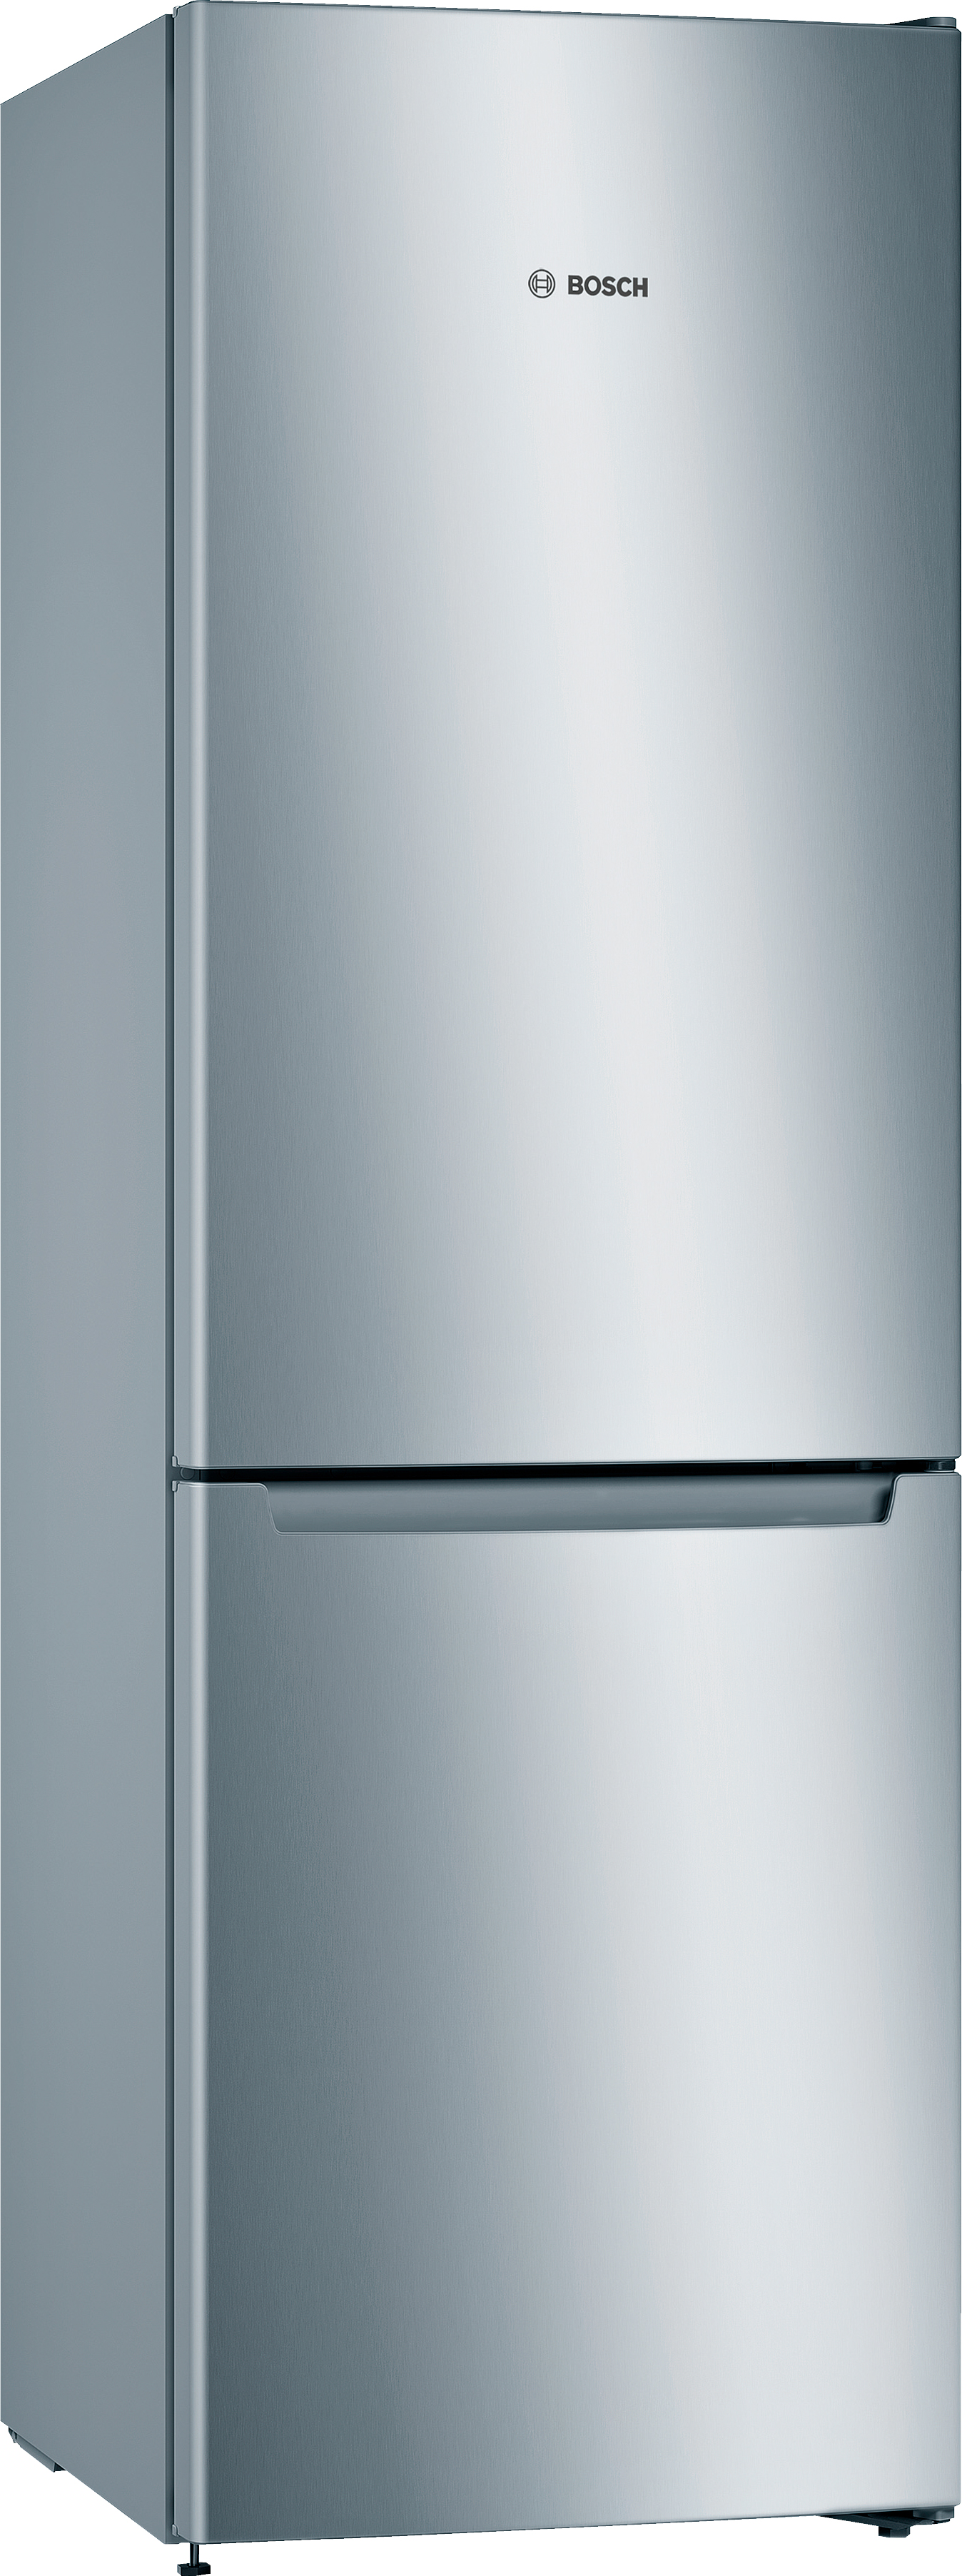 Характеристики холодильник Bosch KGN33NL206